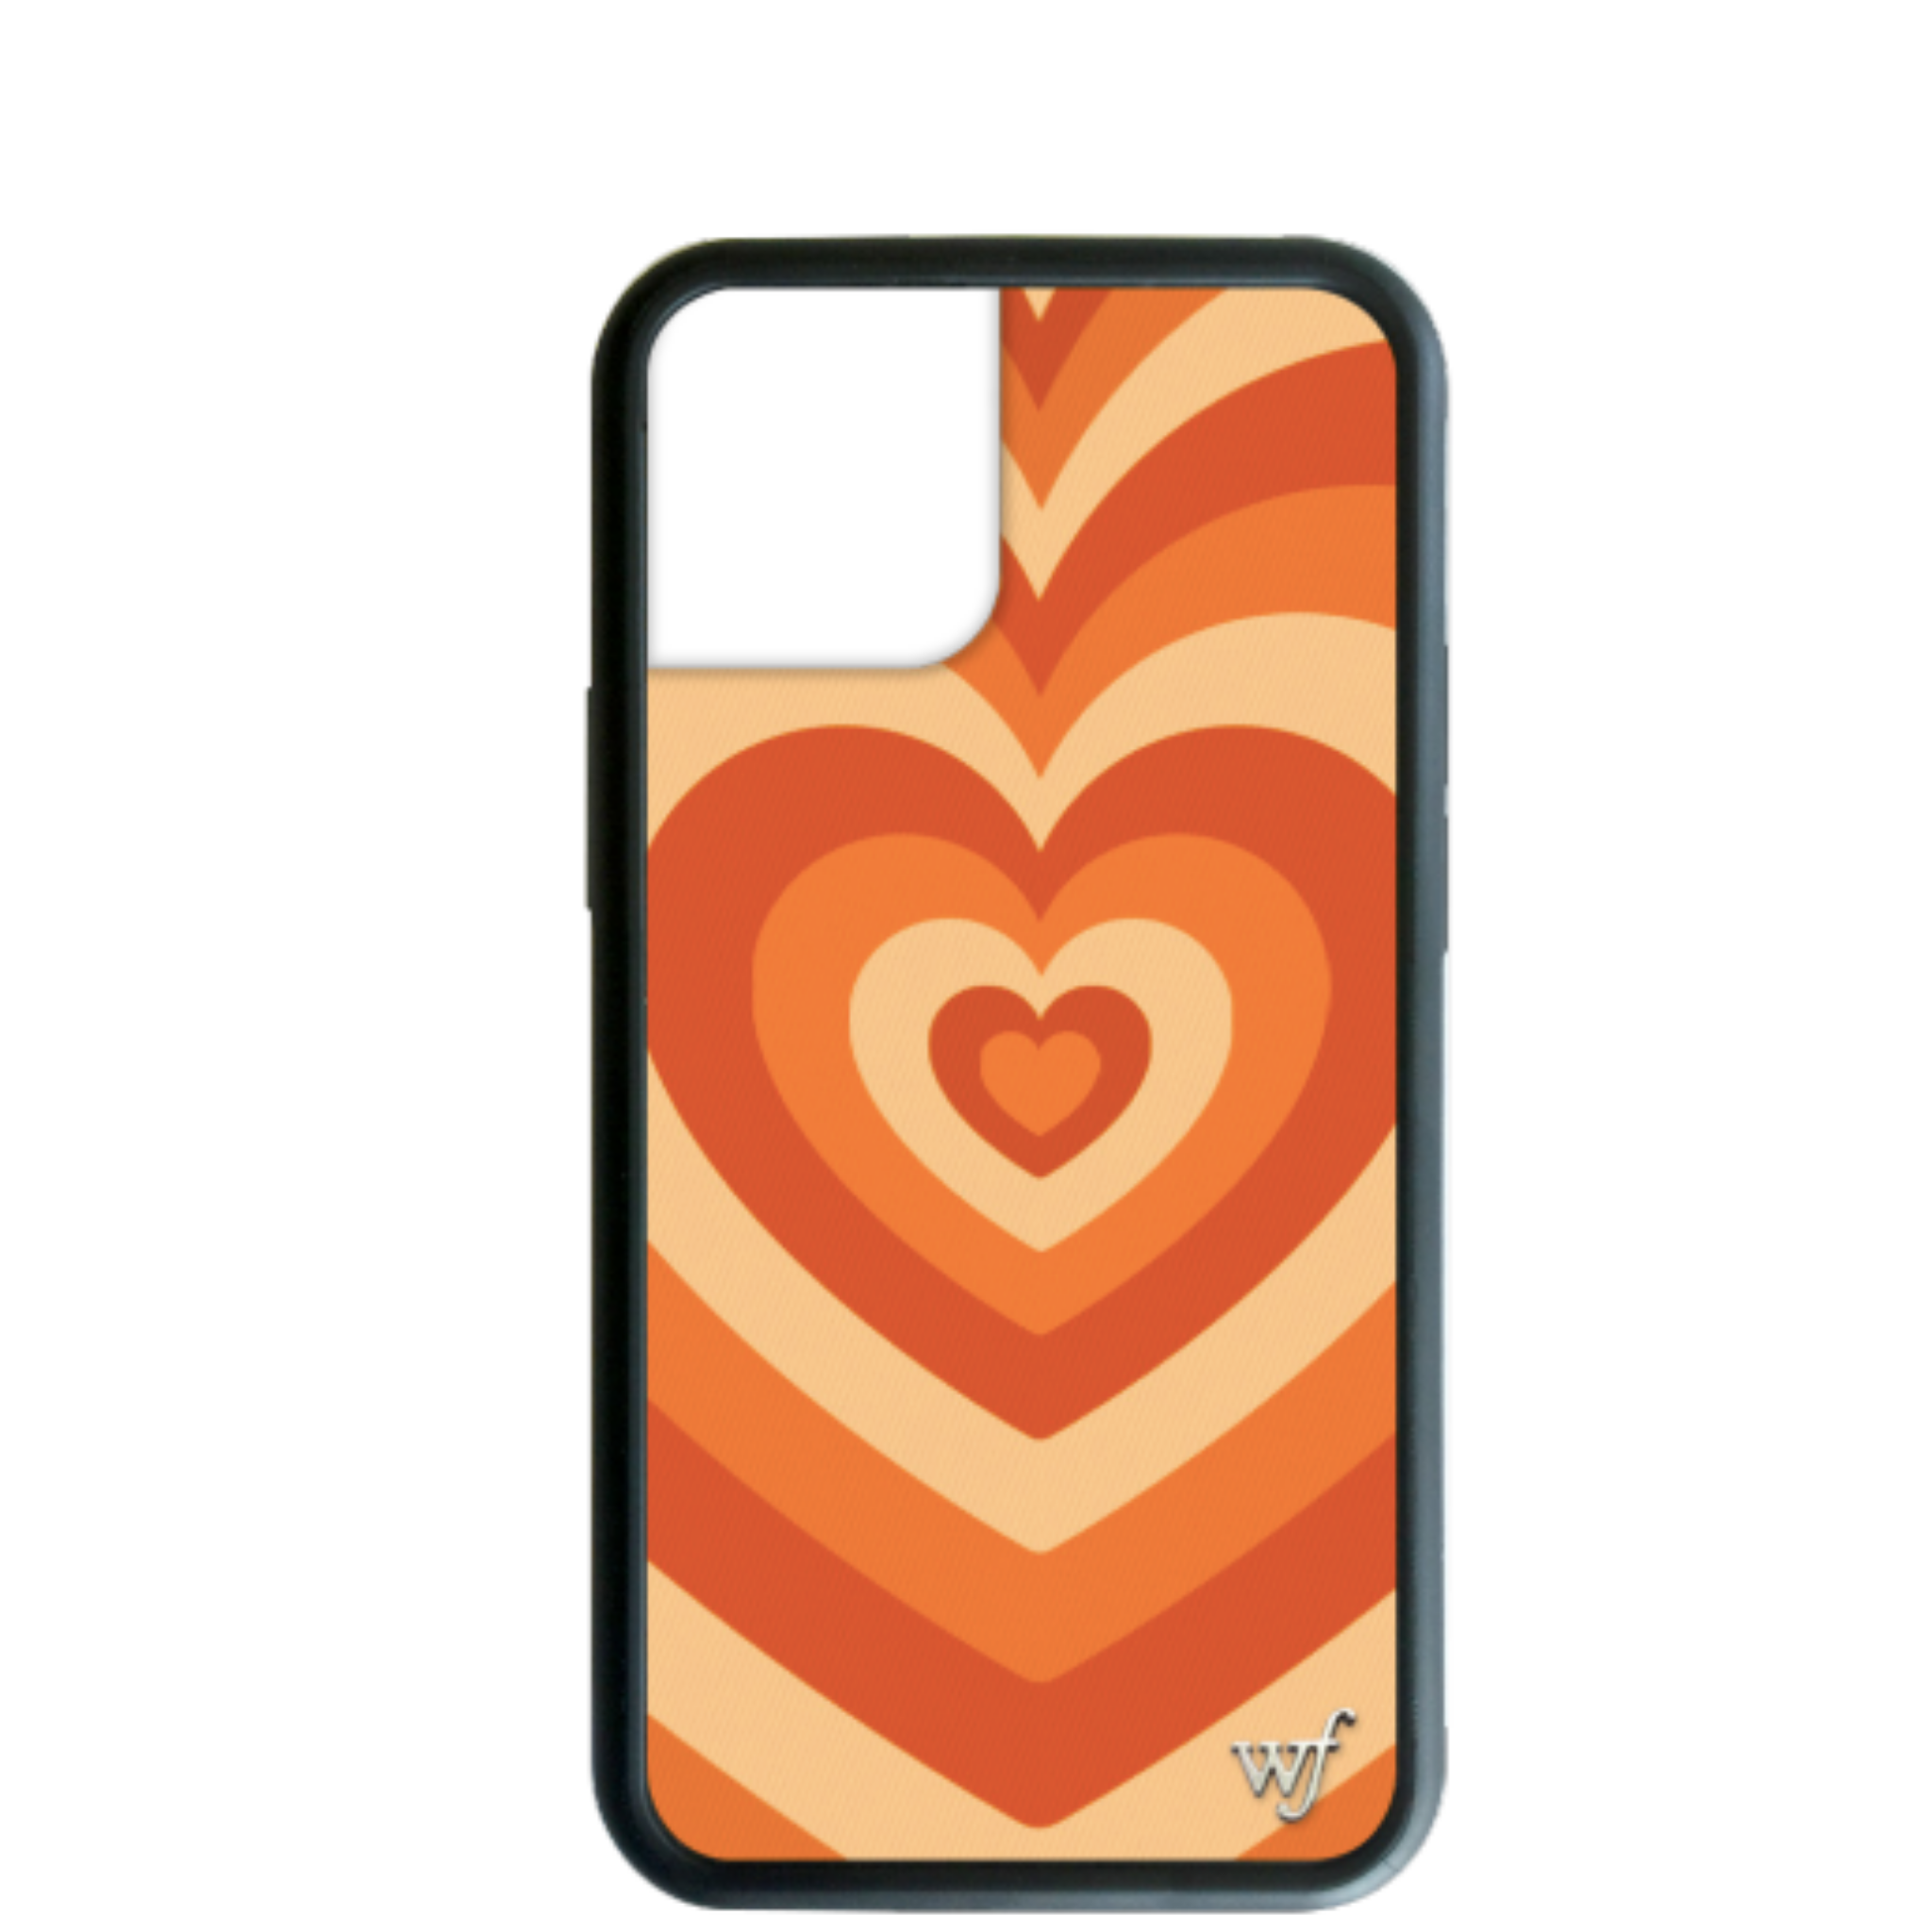 Pumpkin Spice Latte Love iPhone 12 Pro Max Case